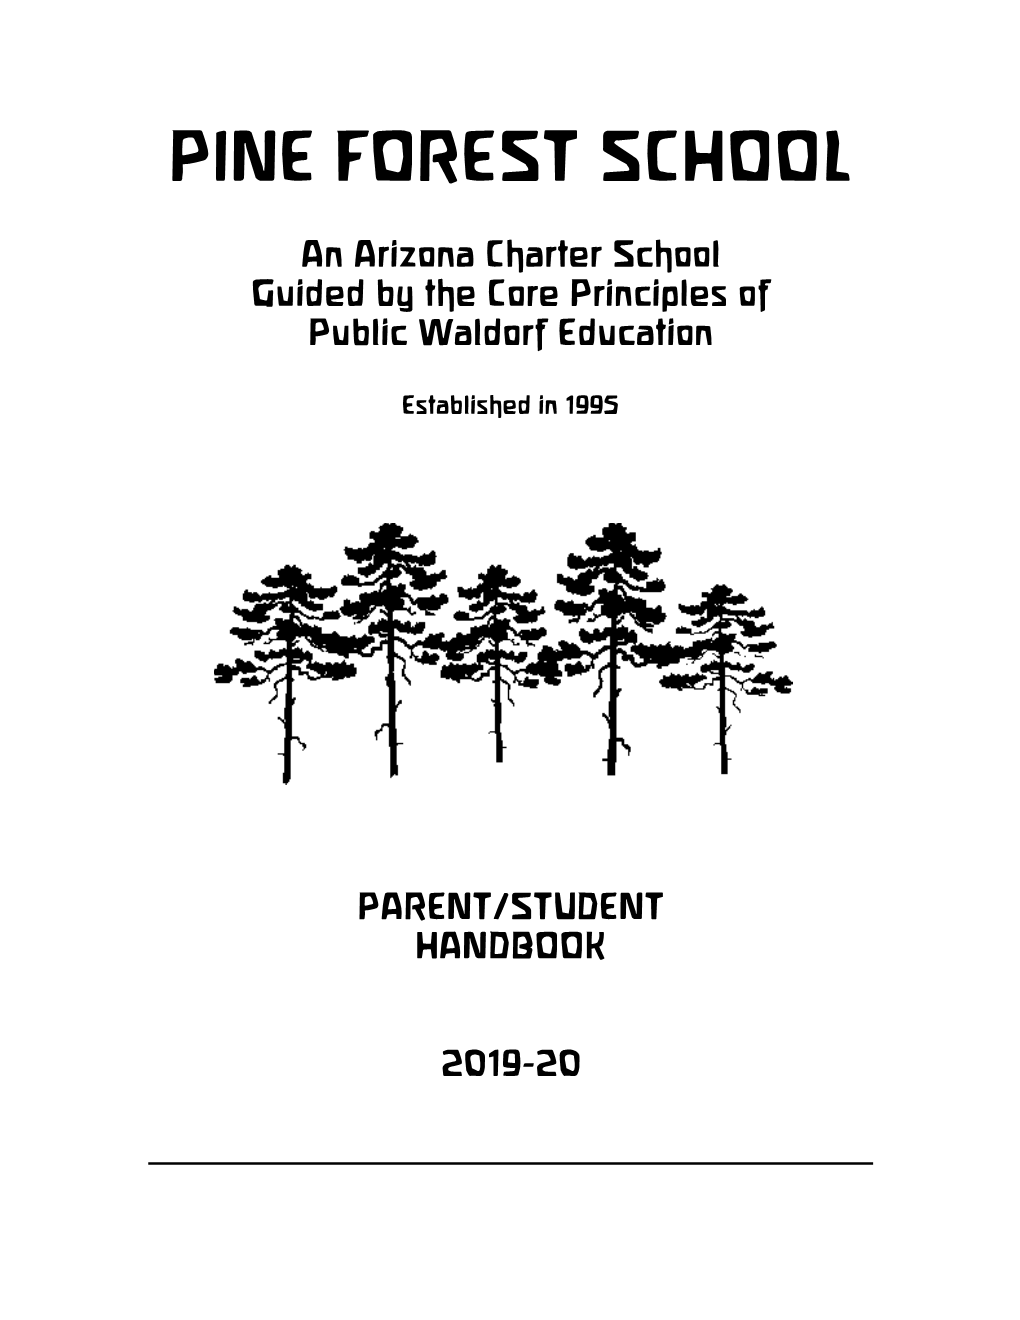 PINE FOREST SCHOOL an Arizona